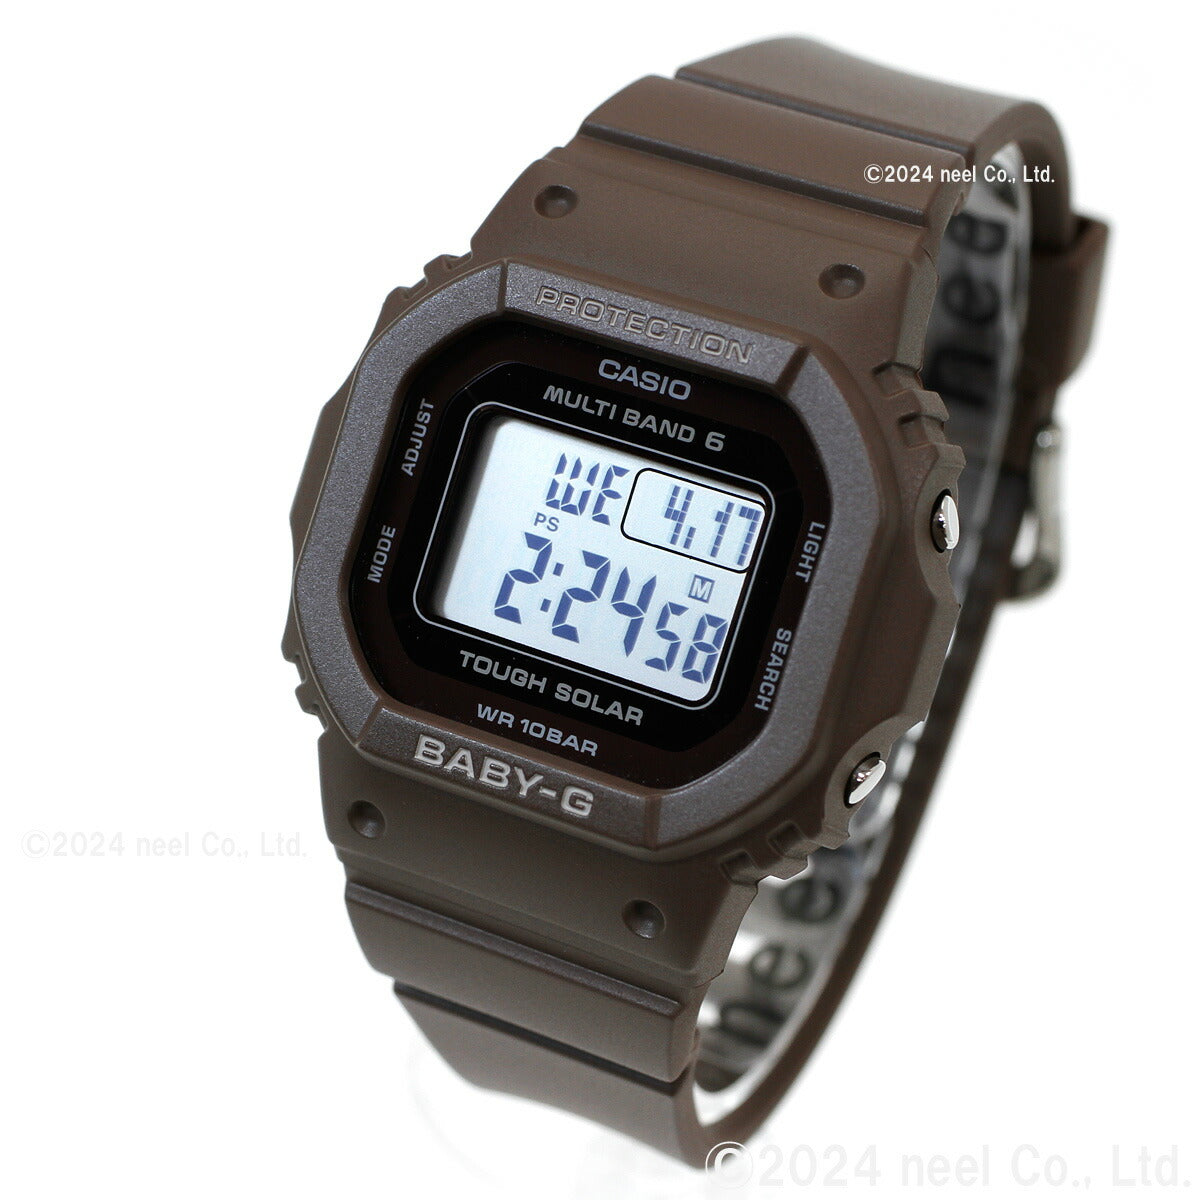 BABY-G カシオ ベビーG レディース 電波 ソーラー 腕時計 タフソーラー BGD-5650-5JF マットブラウン